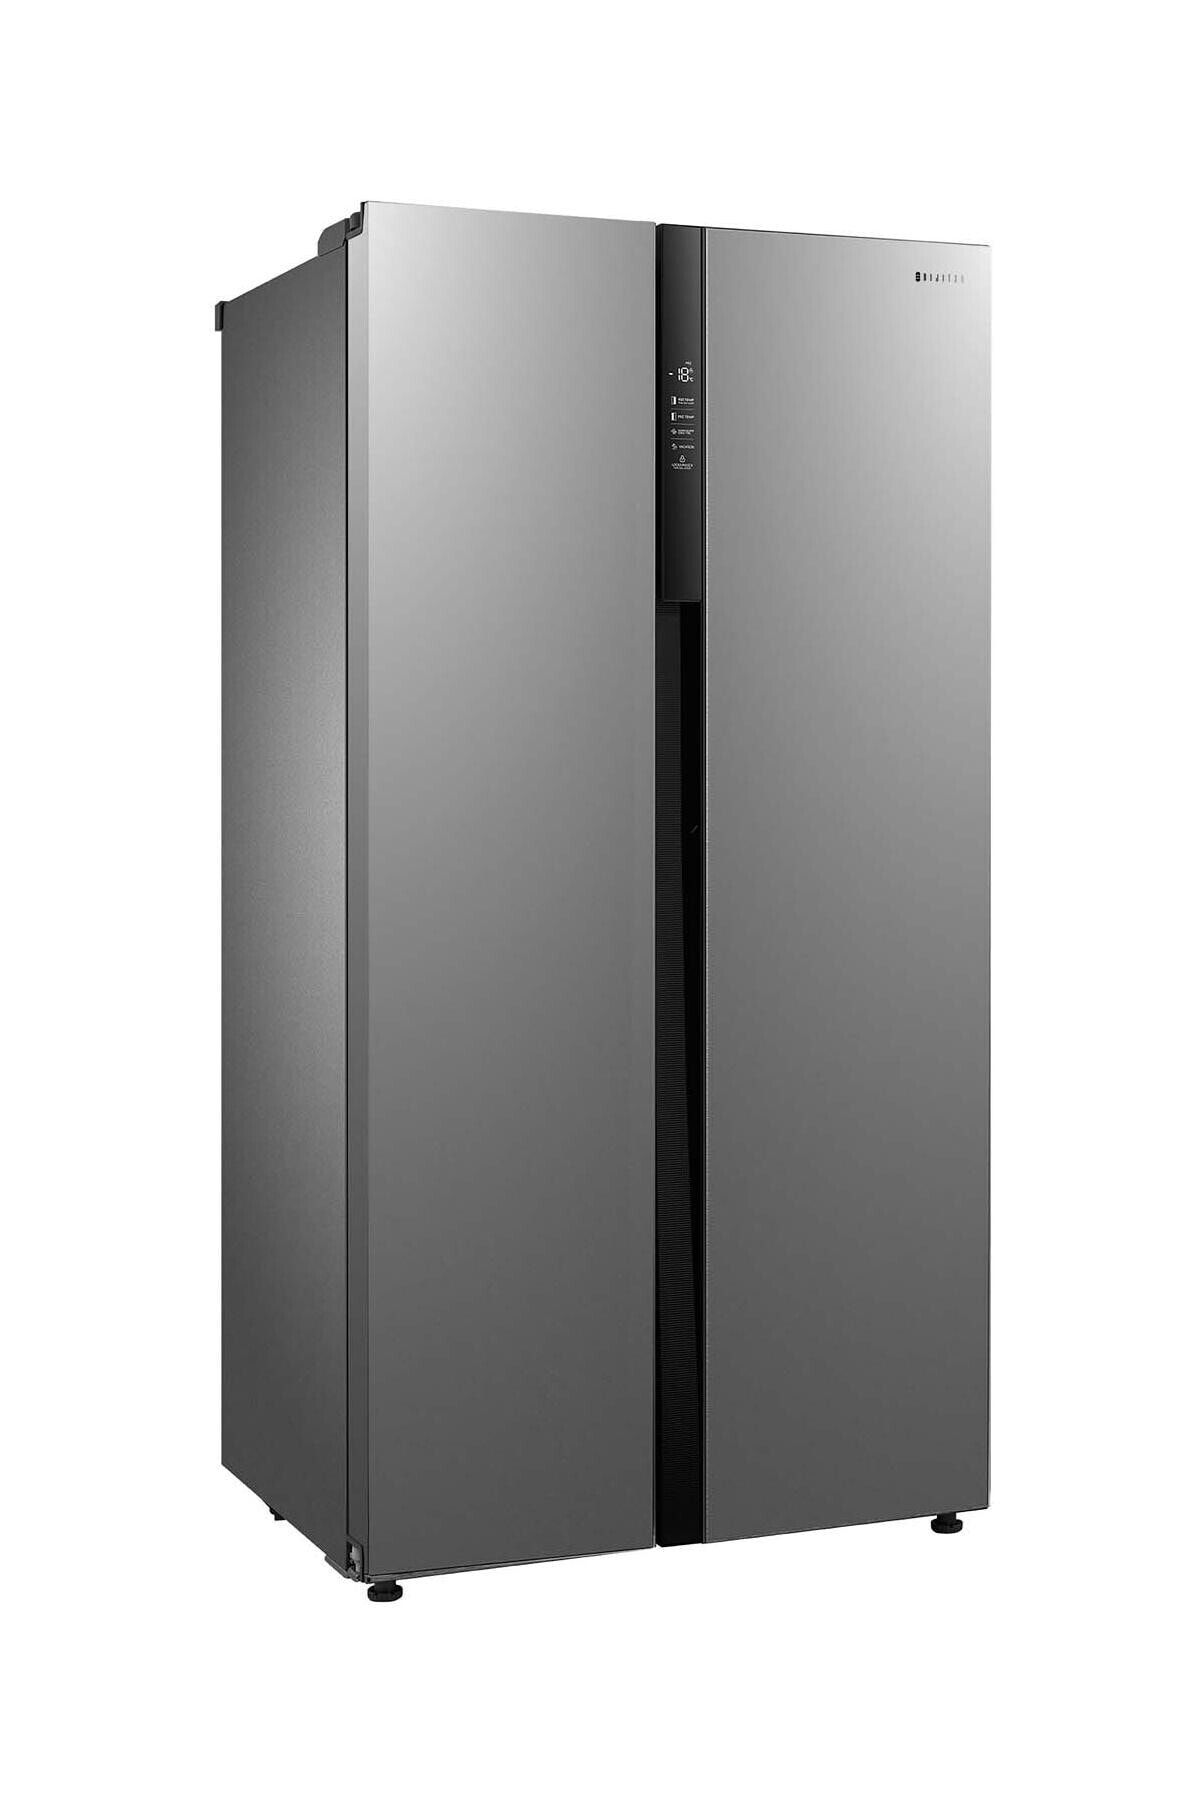 Dijitsu Dbd600 Gardırop Tipi Inox Buzdolabı